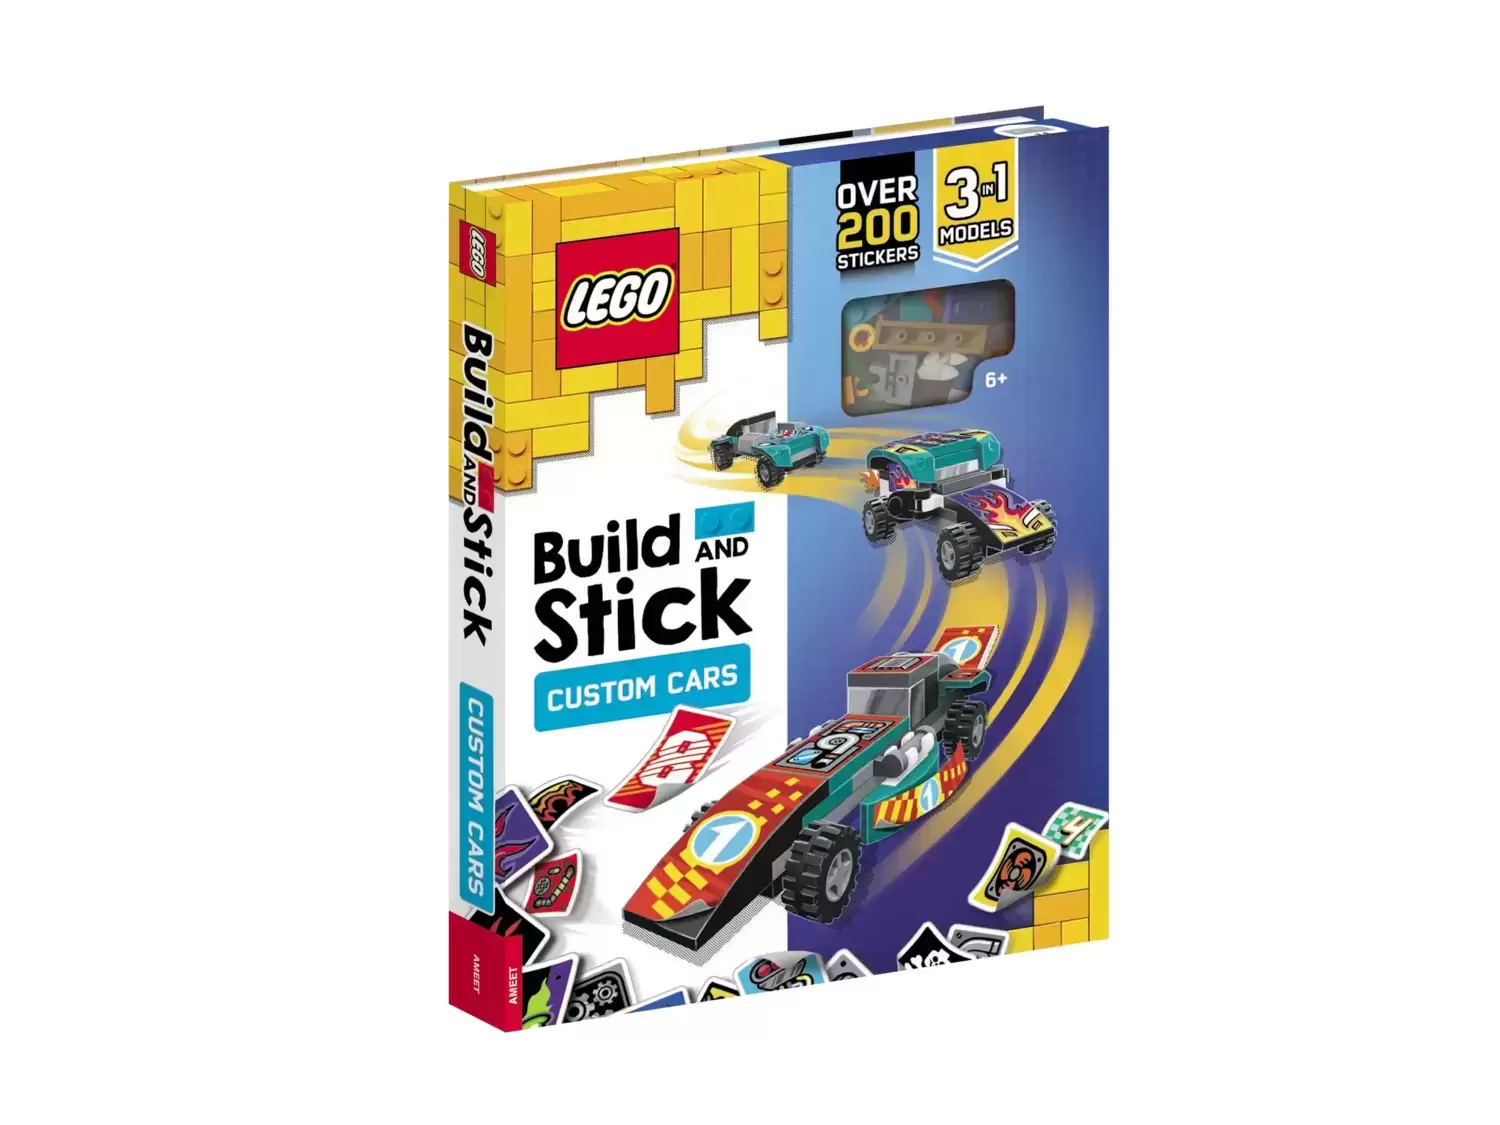 LEGO Books - Build and Stick